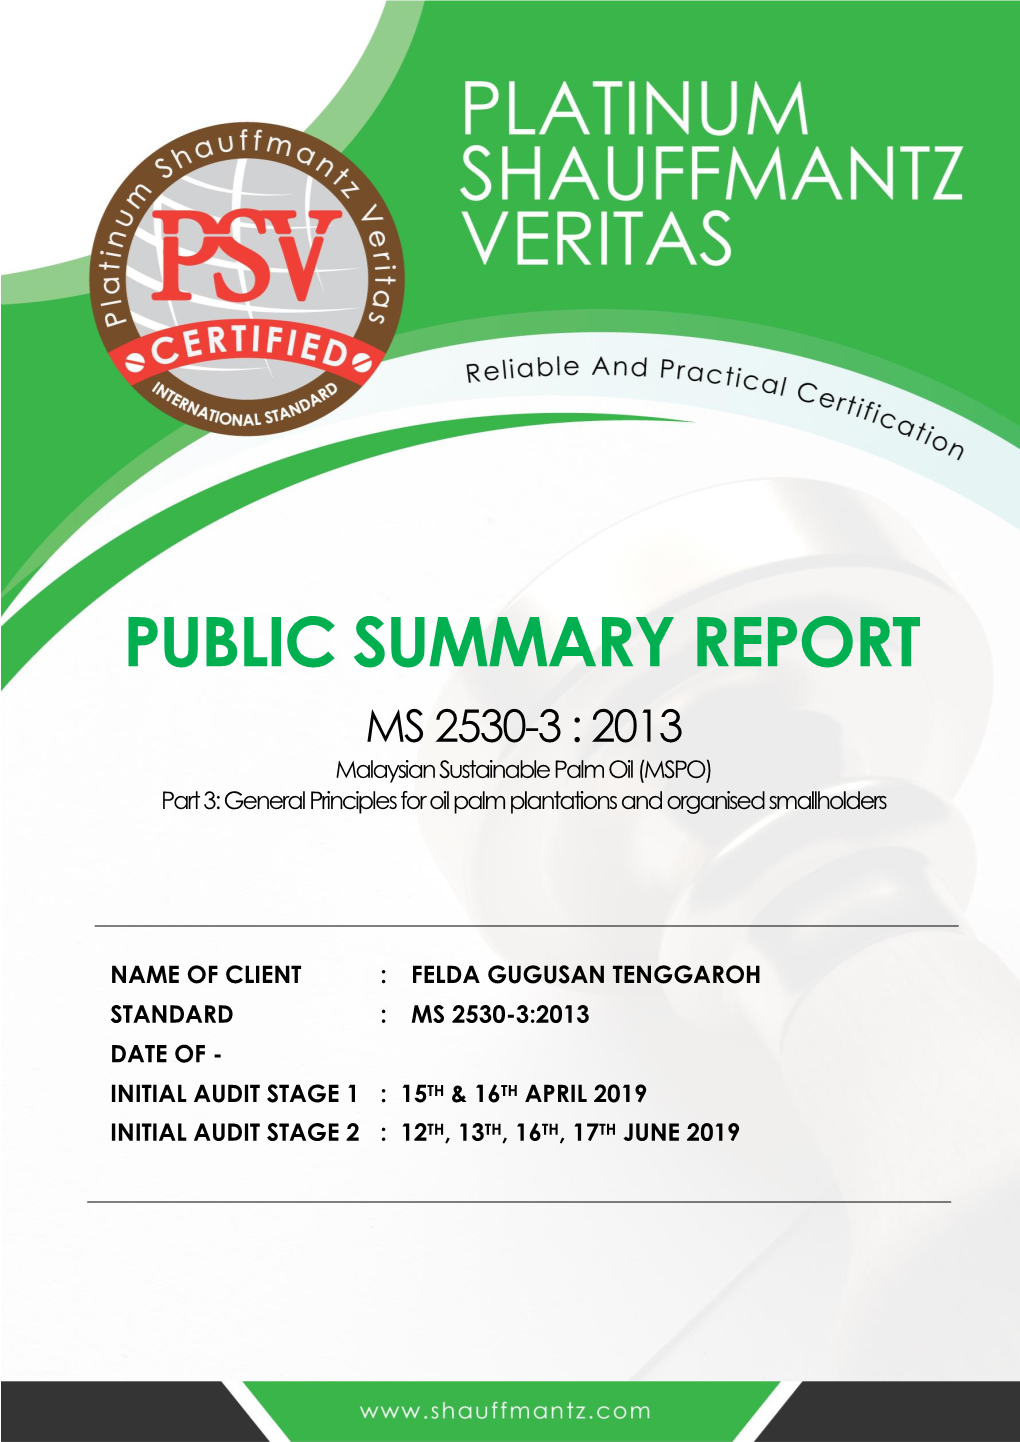 AUDIT REPORT: Management System Certification